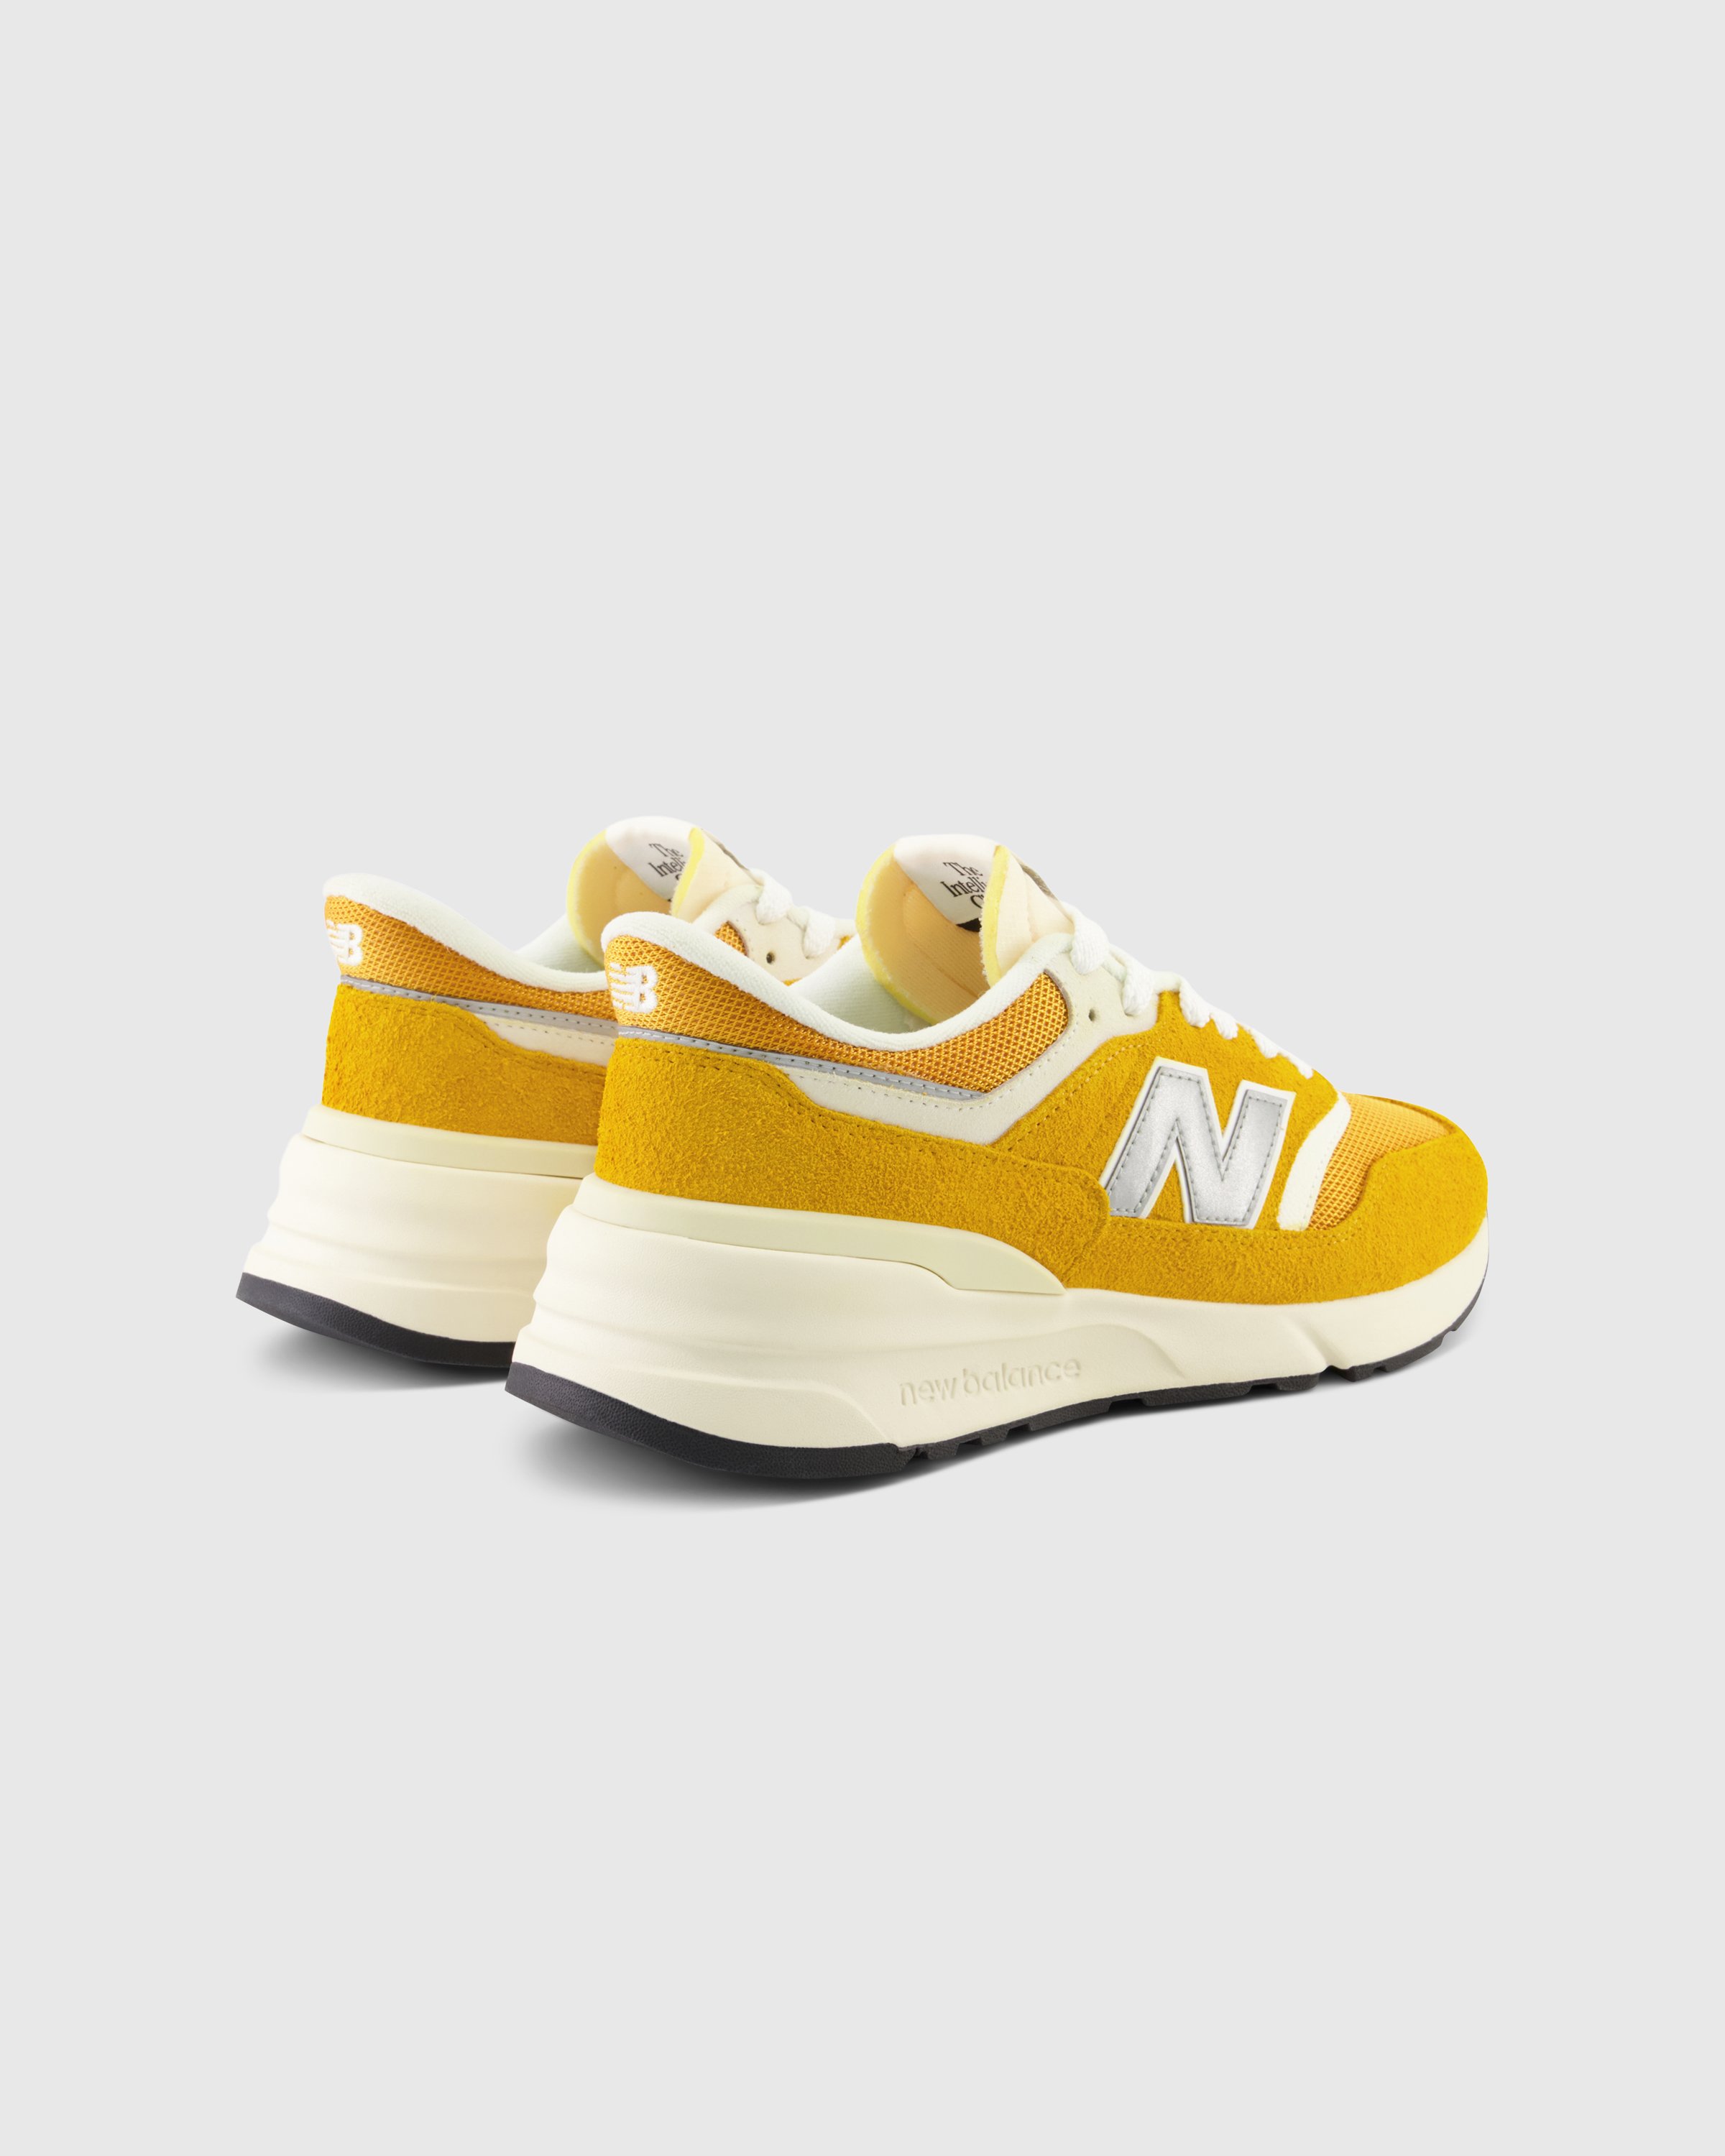 New Balance - U 997R CB Varsity Gold - Footwear - Yellow - Image 3